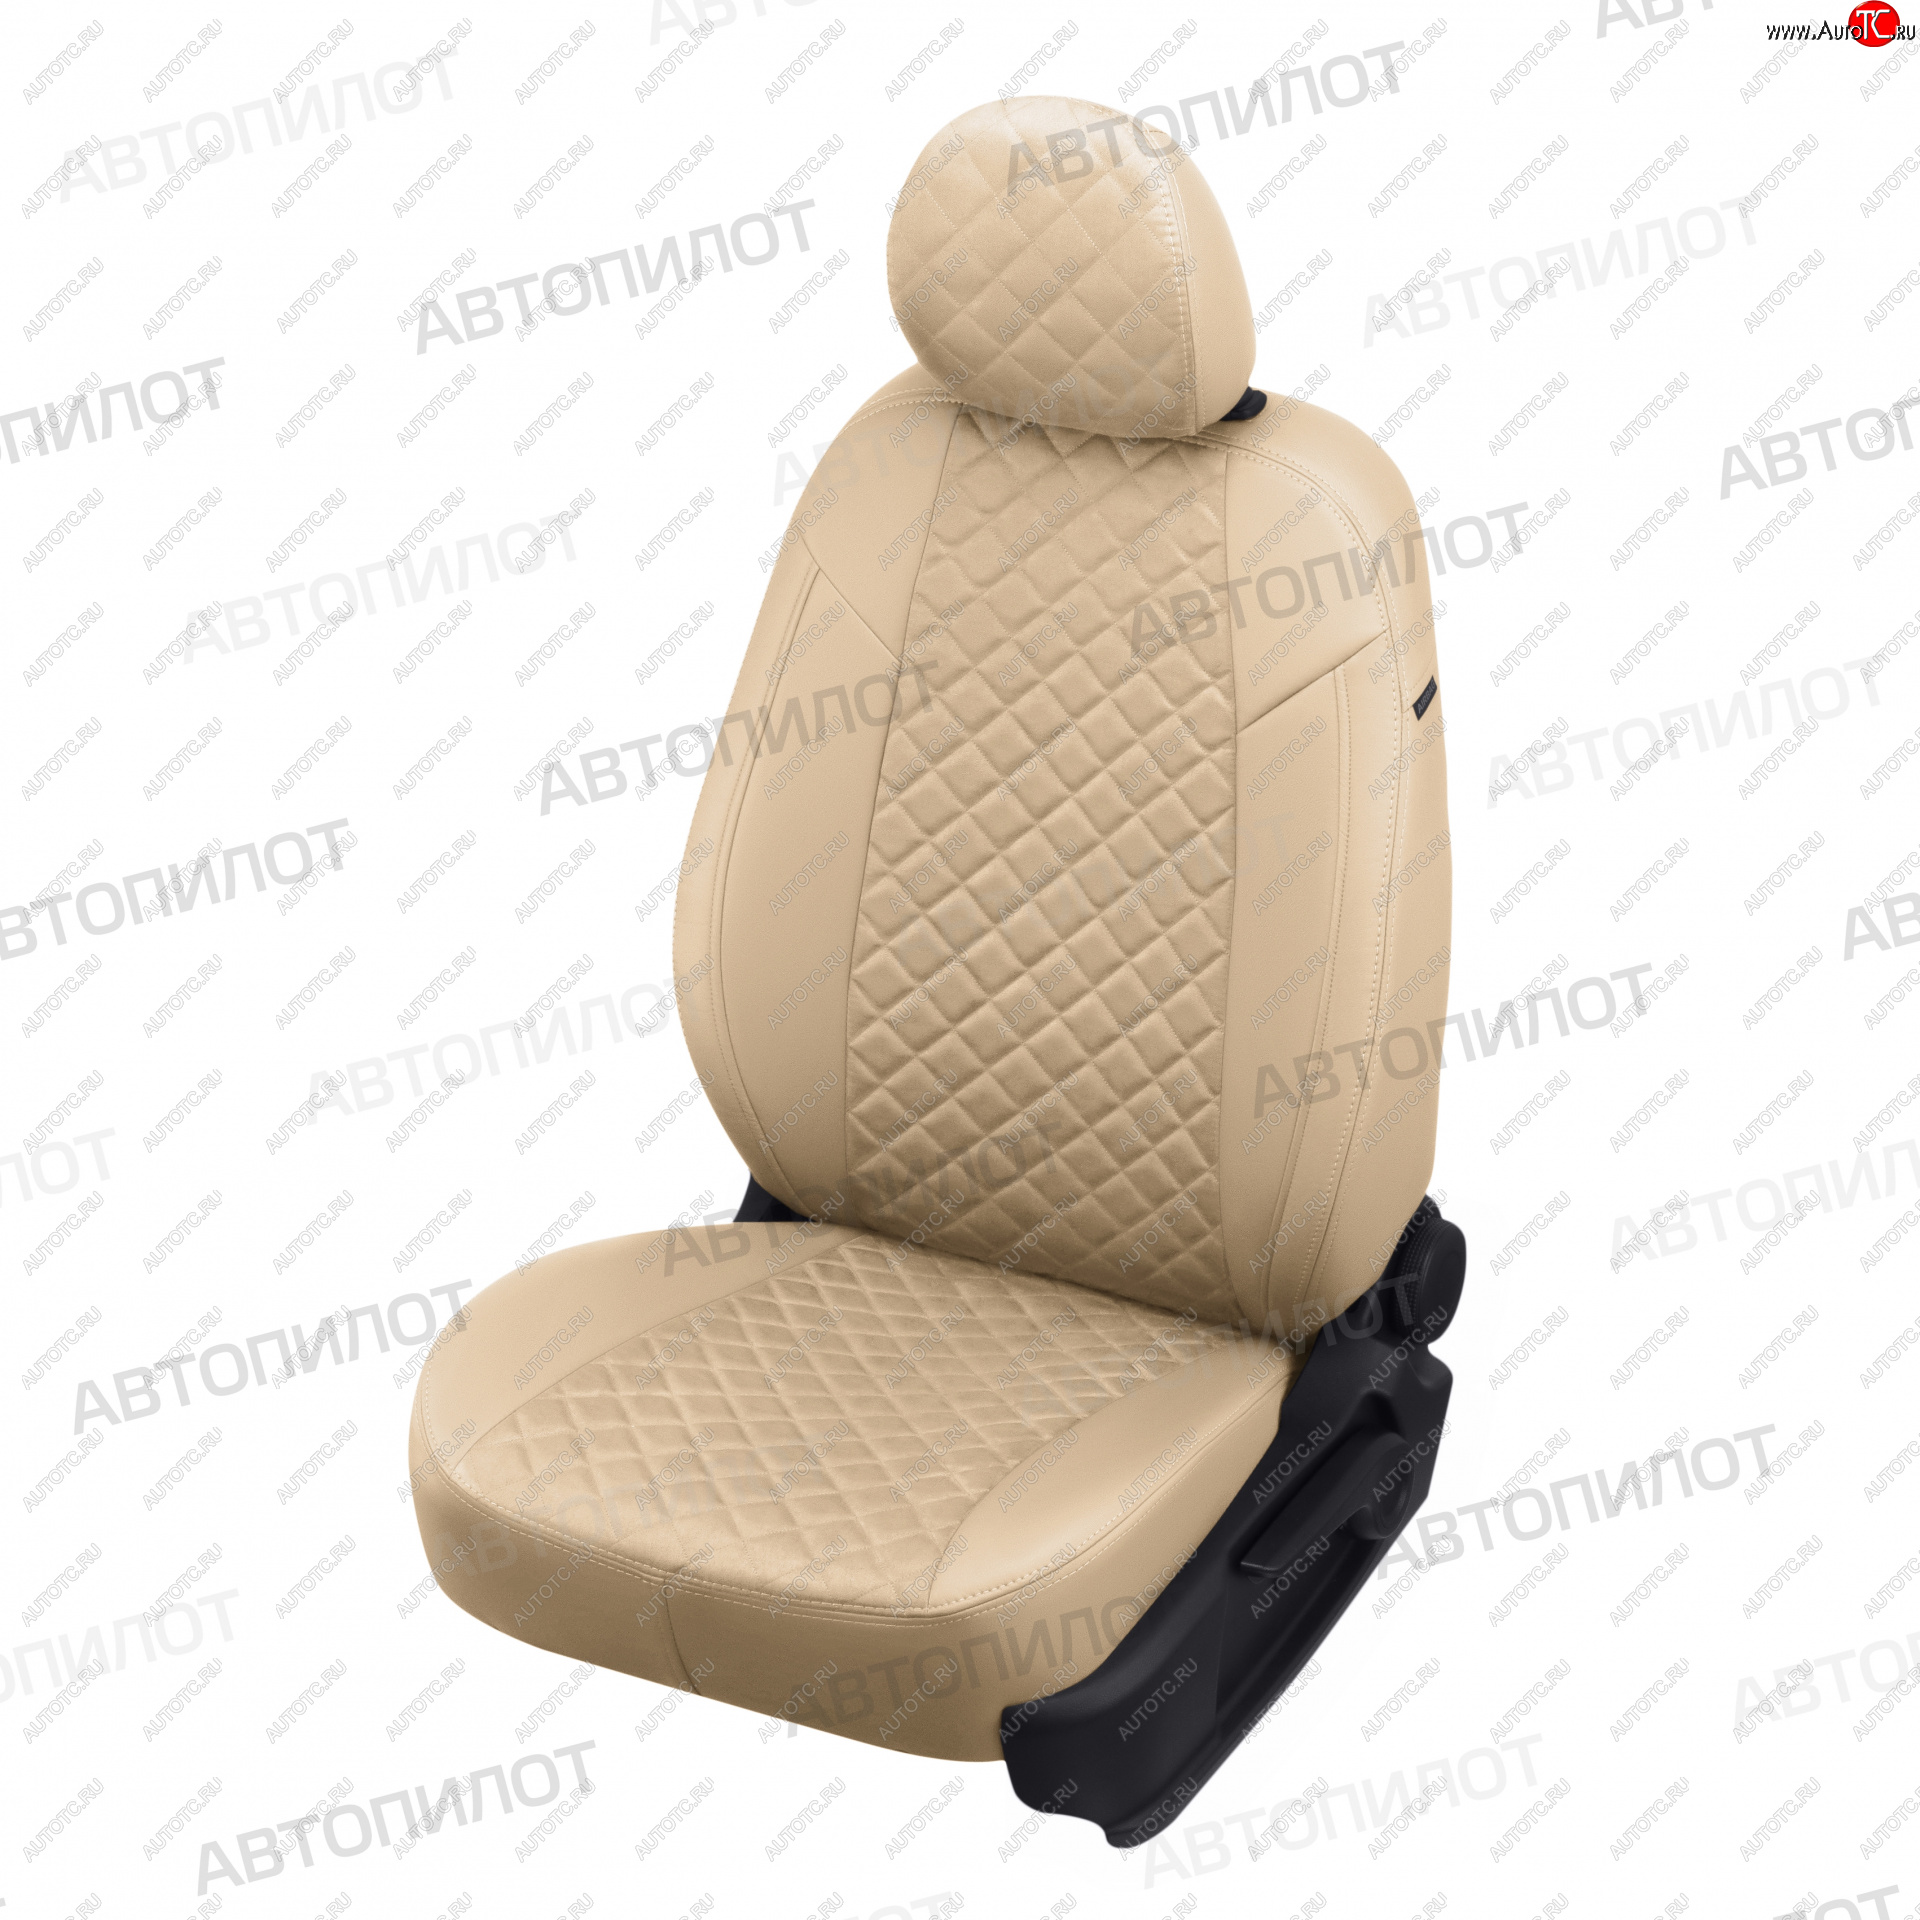 13 999 р. Чехлы сидений (экокожа/алькантара, S-Line) Автопилот Ромб  Audi Q5  8R (2008-2017) (бежевый)